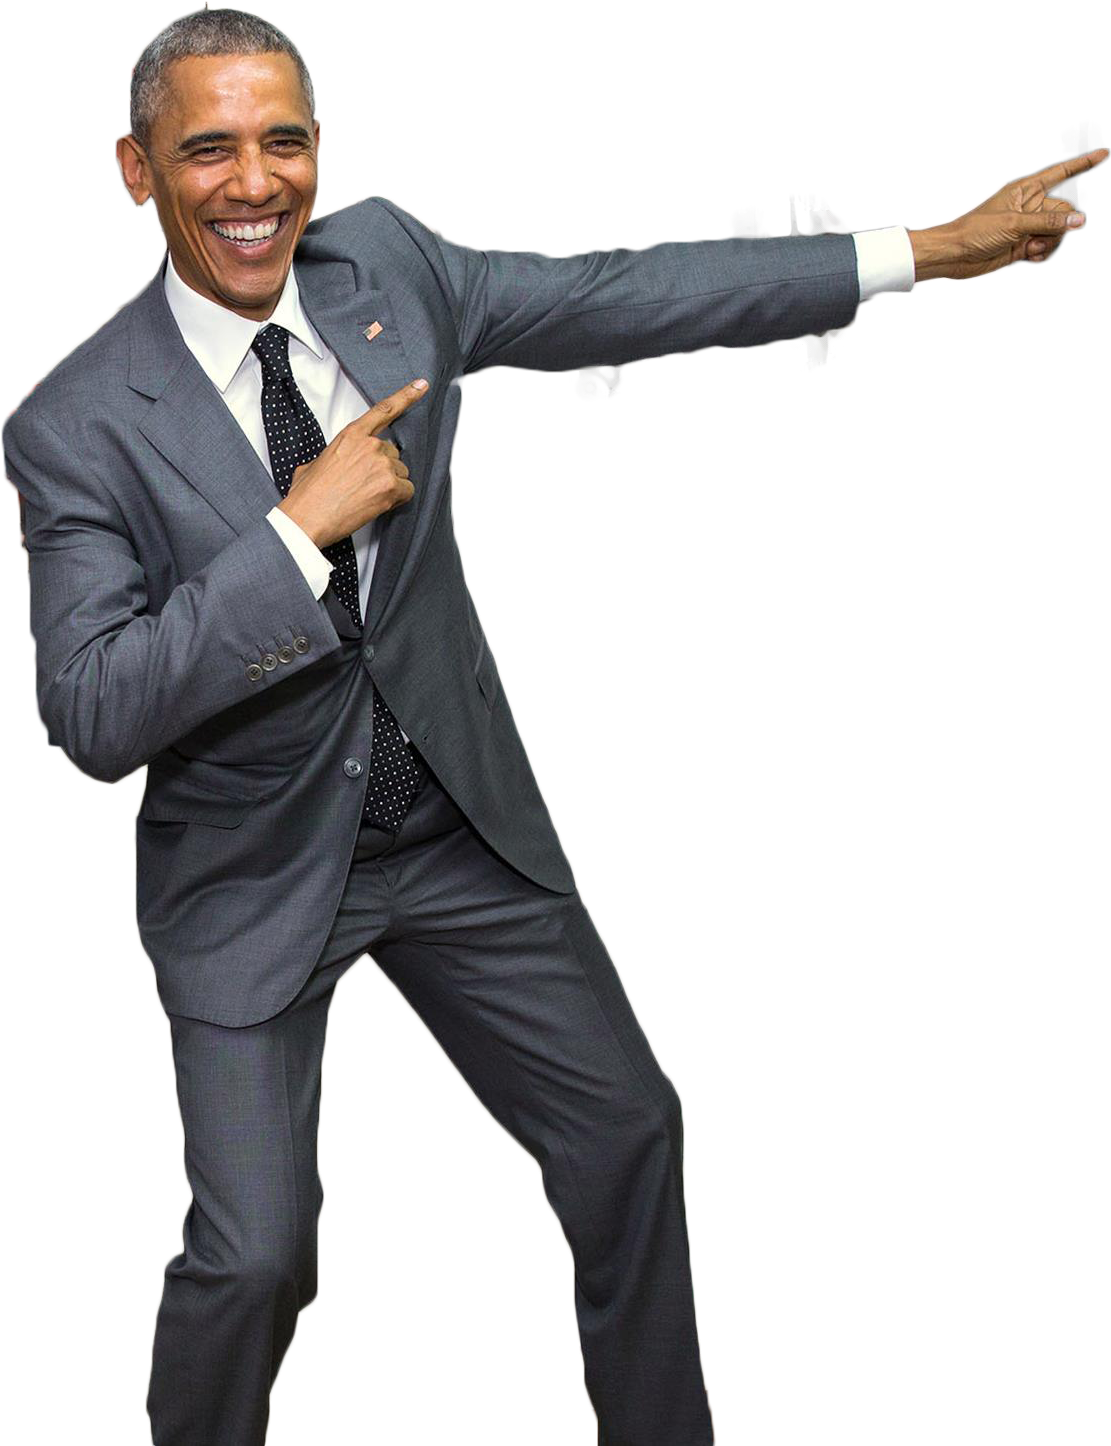 Barack Obama Pointing Pose PNG image